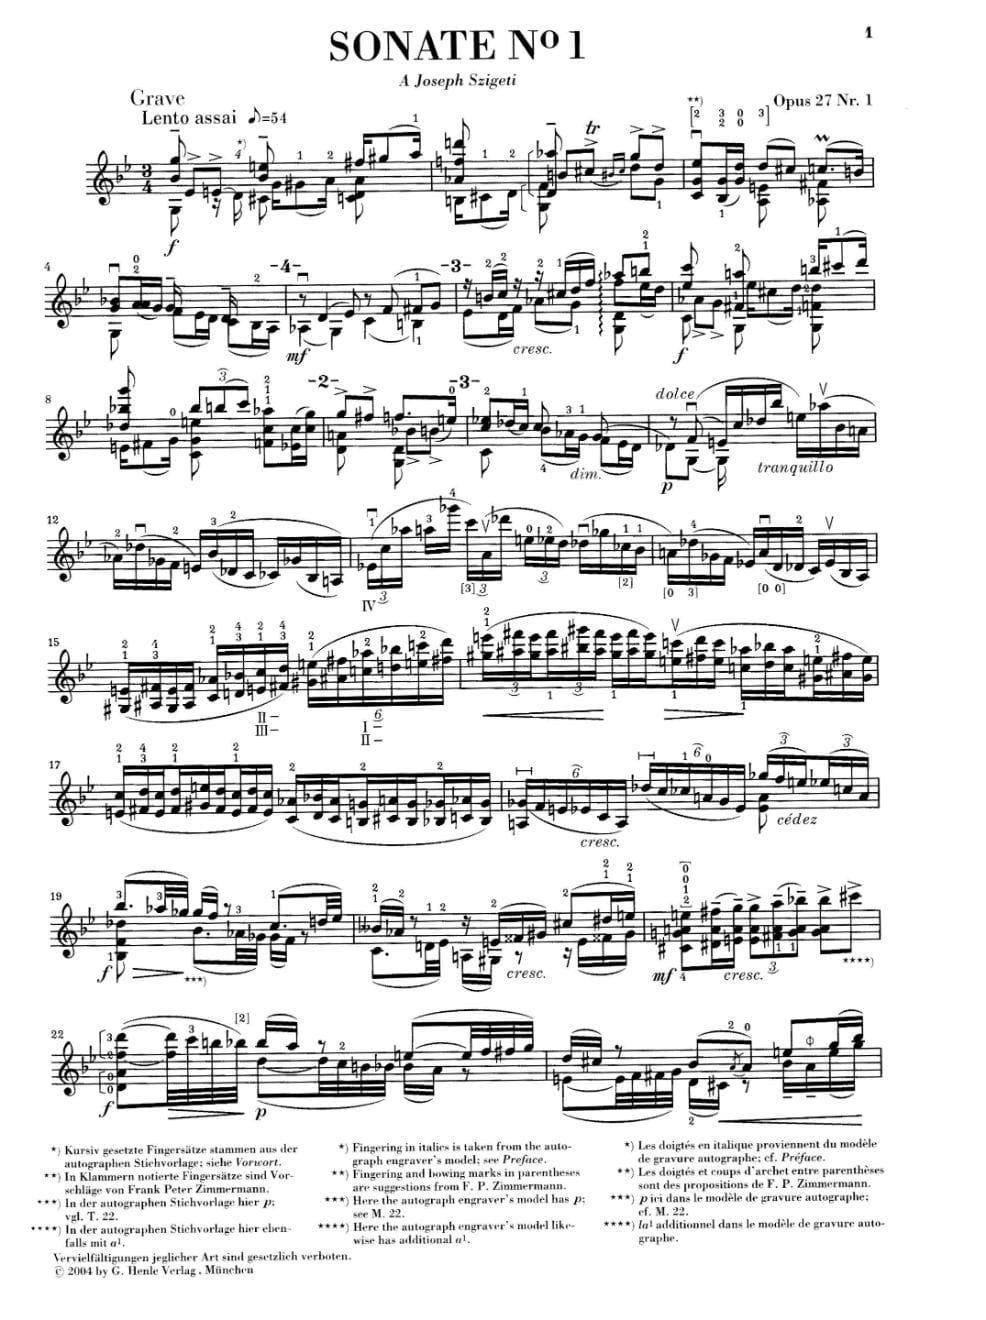 Ysaÿe, Eugène - Six Sonatas, Op 27 - Violin solo - G Henle Verlag URTEXT